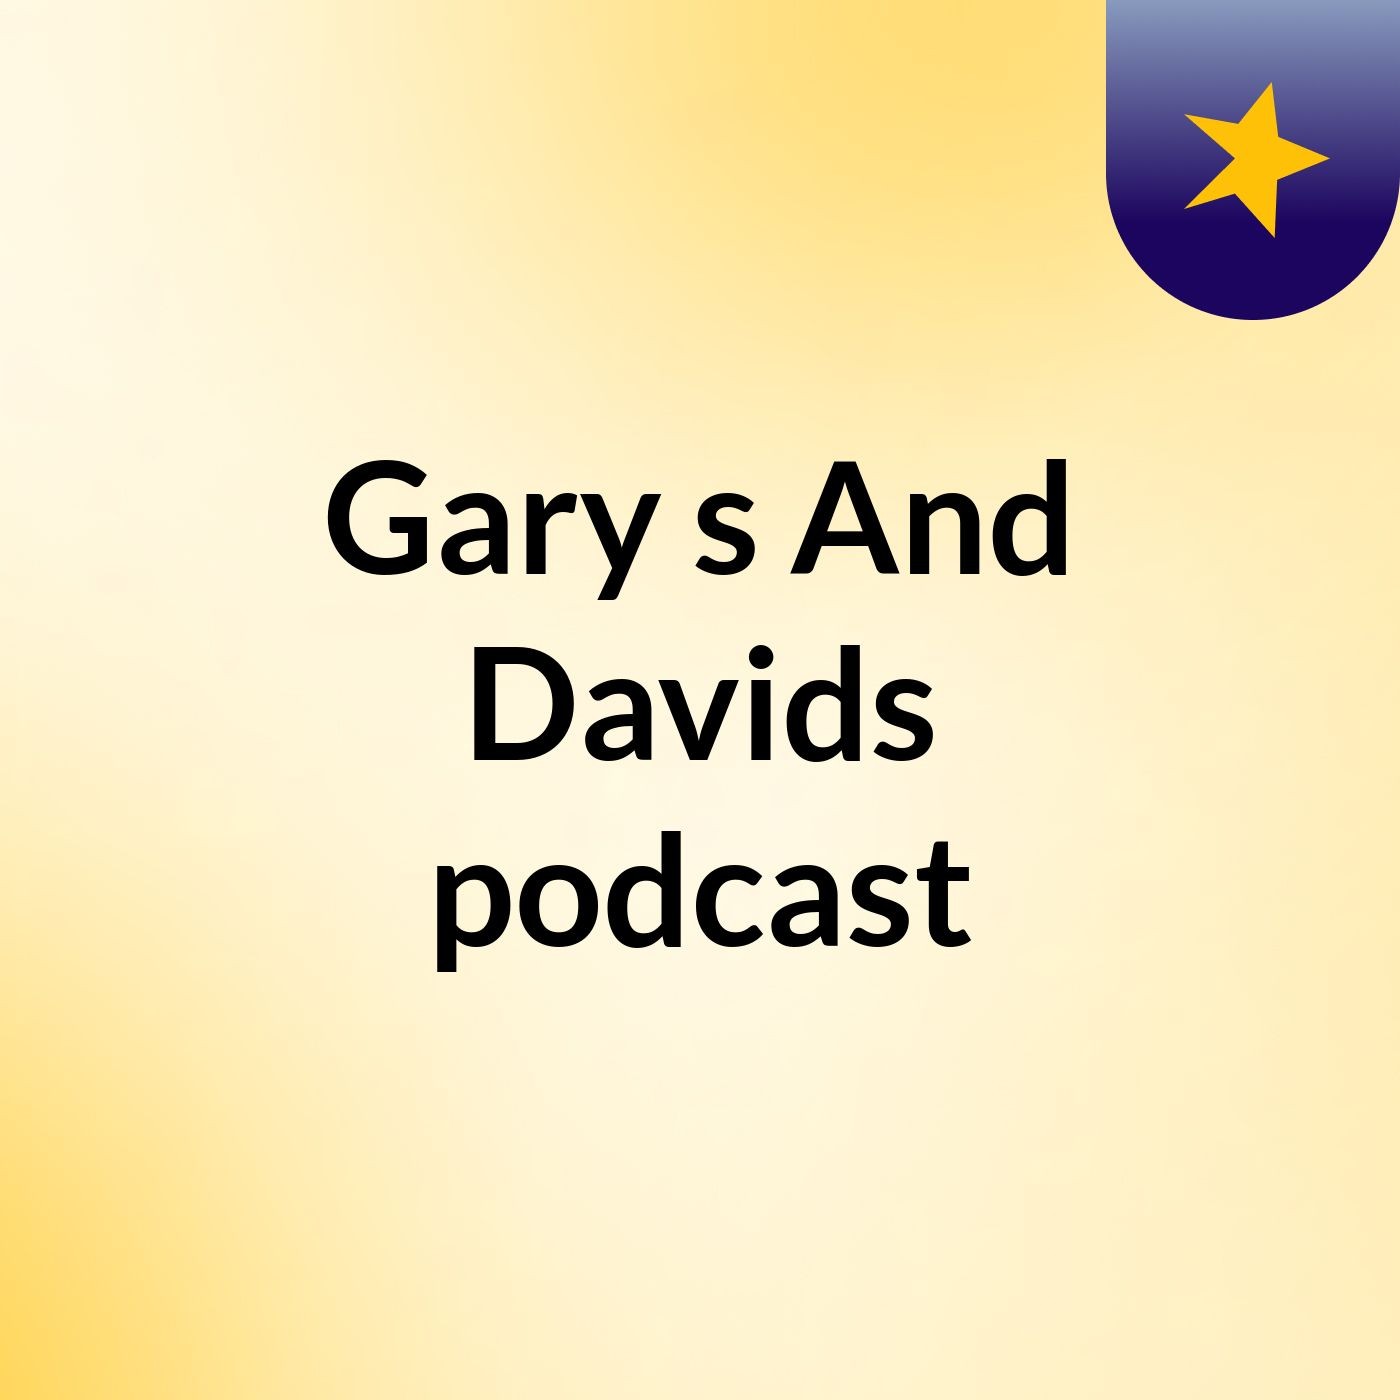 Gary's And Davids podcast